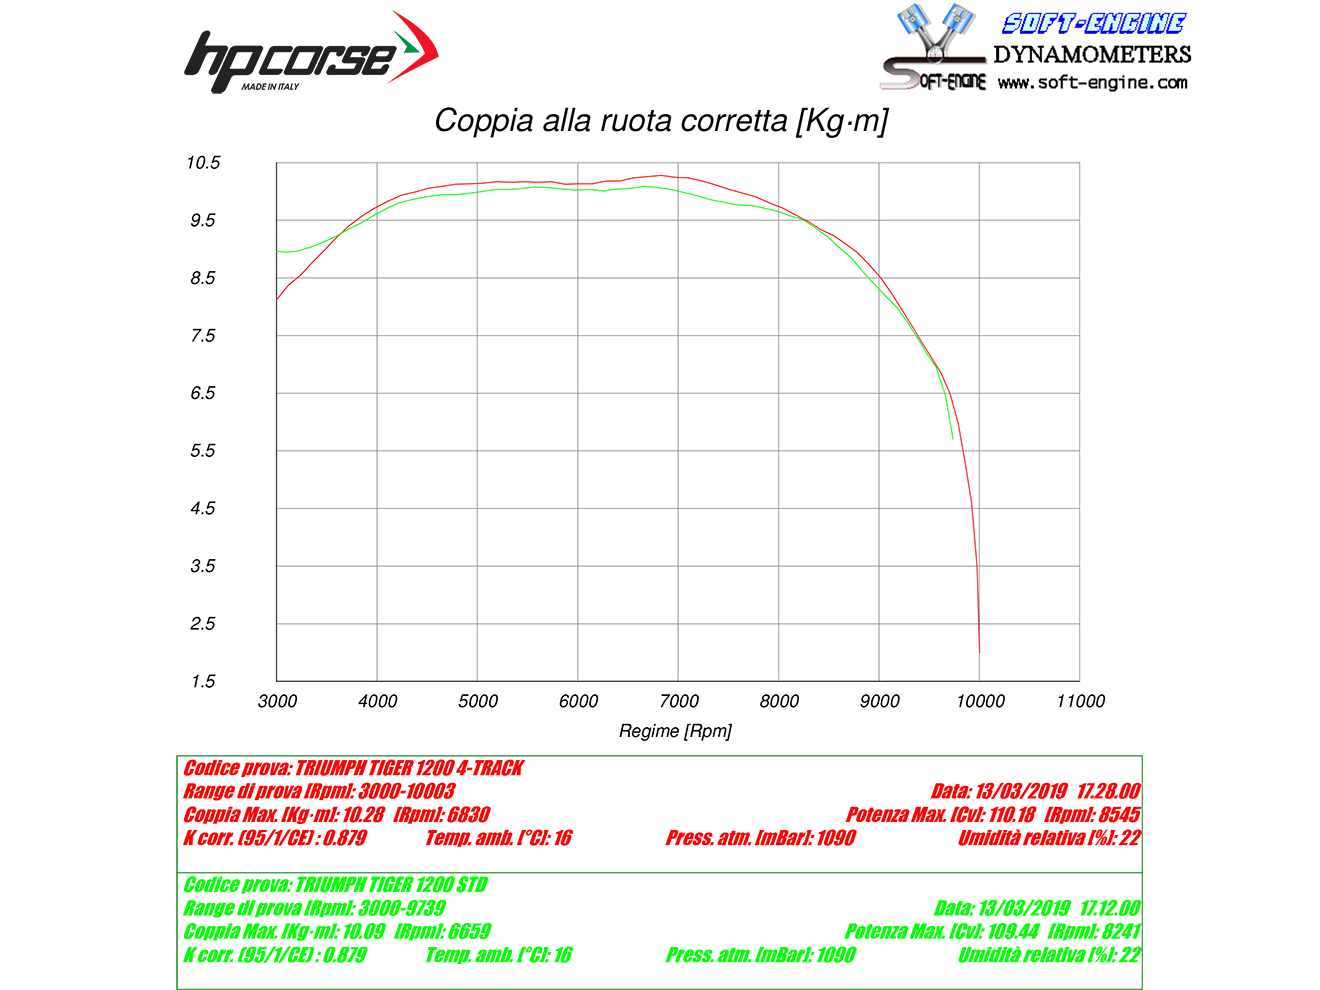 HP CORSE Triumph Tiger 1200 (18/21) Slip-on Exhaust "4-Track R Satin" (EU homologated)